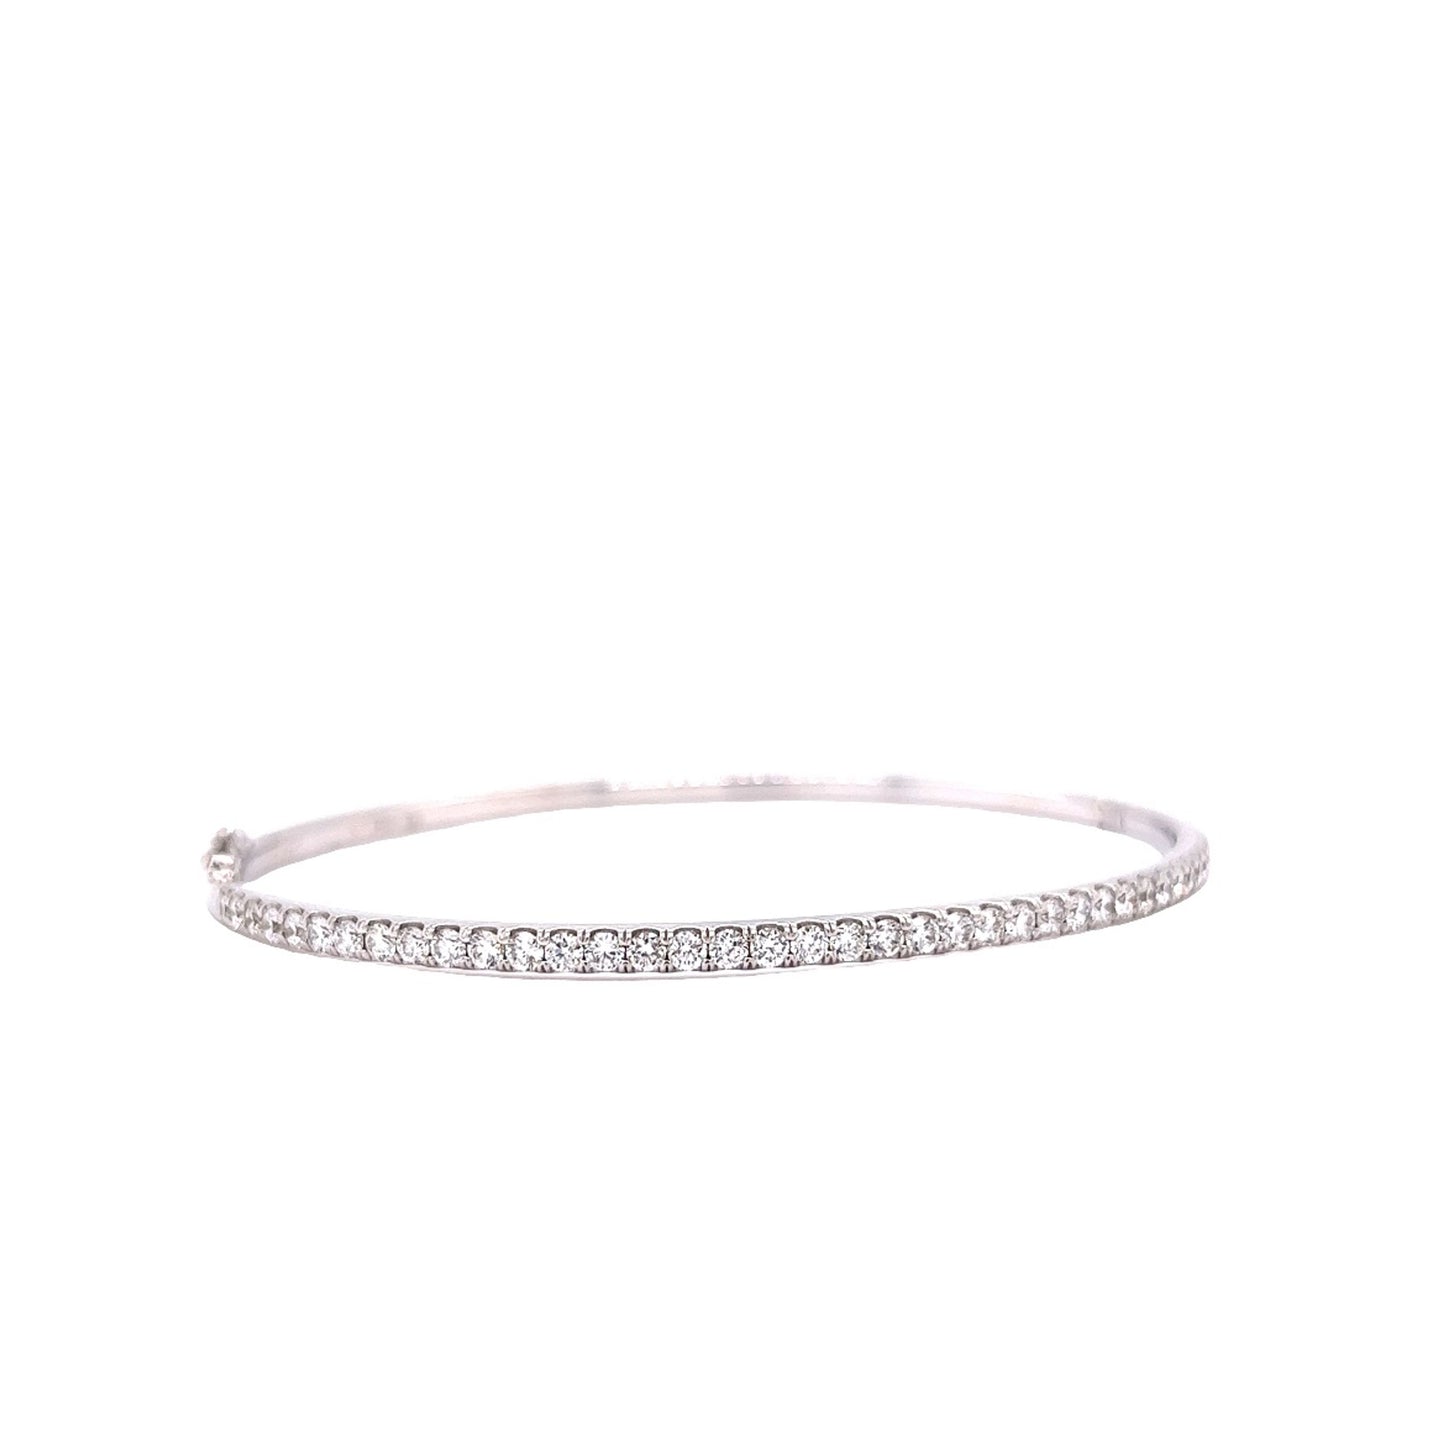 1 Carat Diamond Tennis Bracelet in 14k White Gold